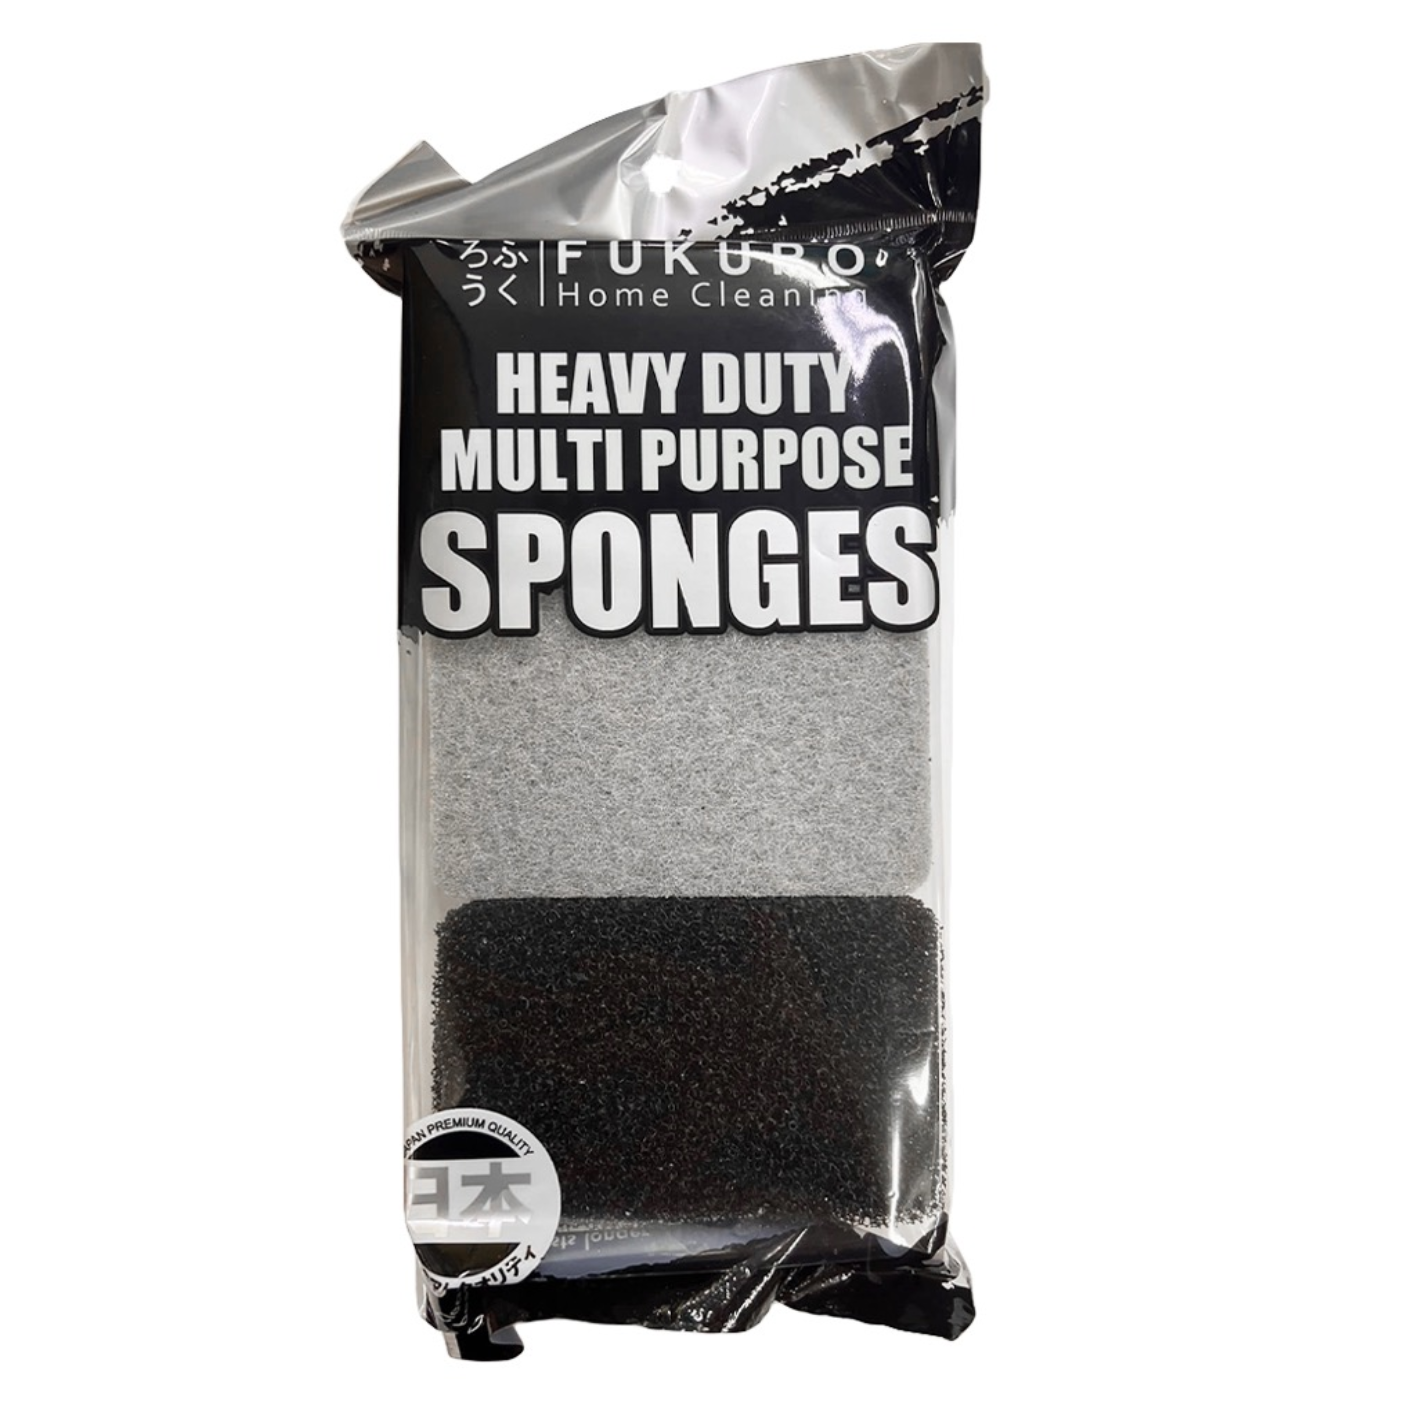 FUKURO Heavy Duty MULTI-PURPOSE Sponge 3PC/PACK